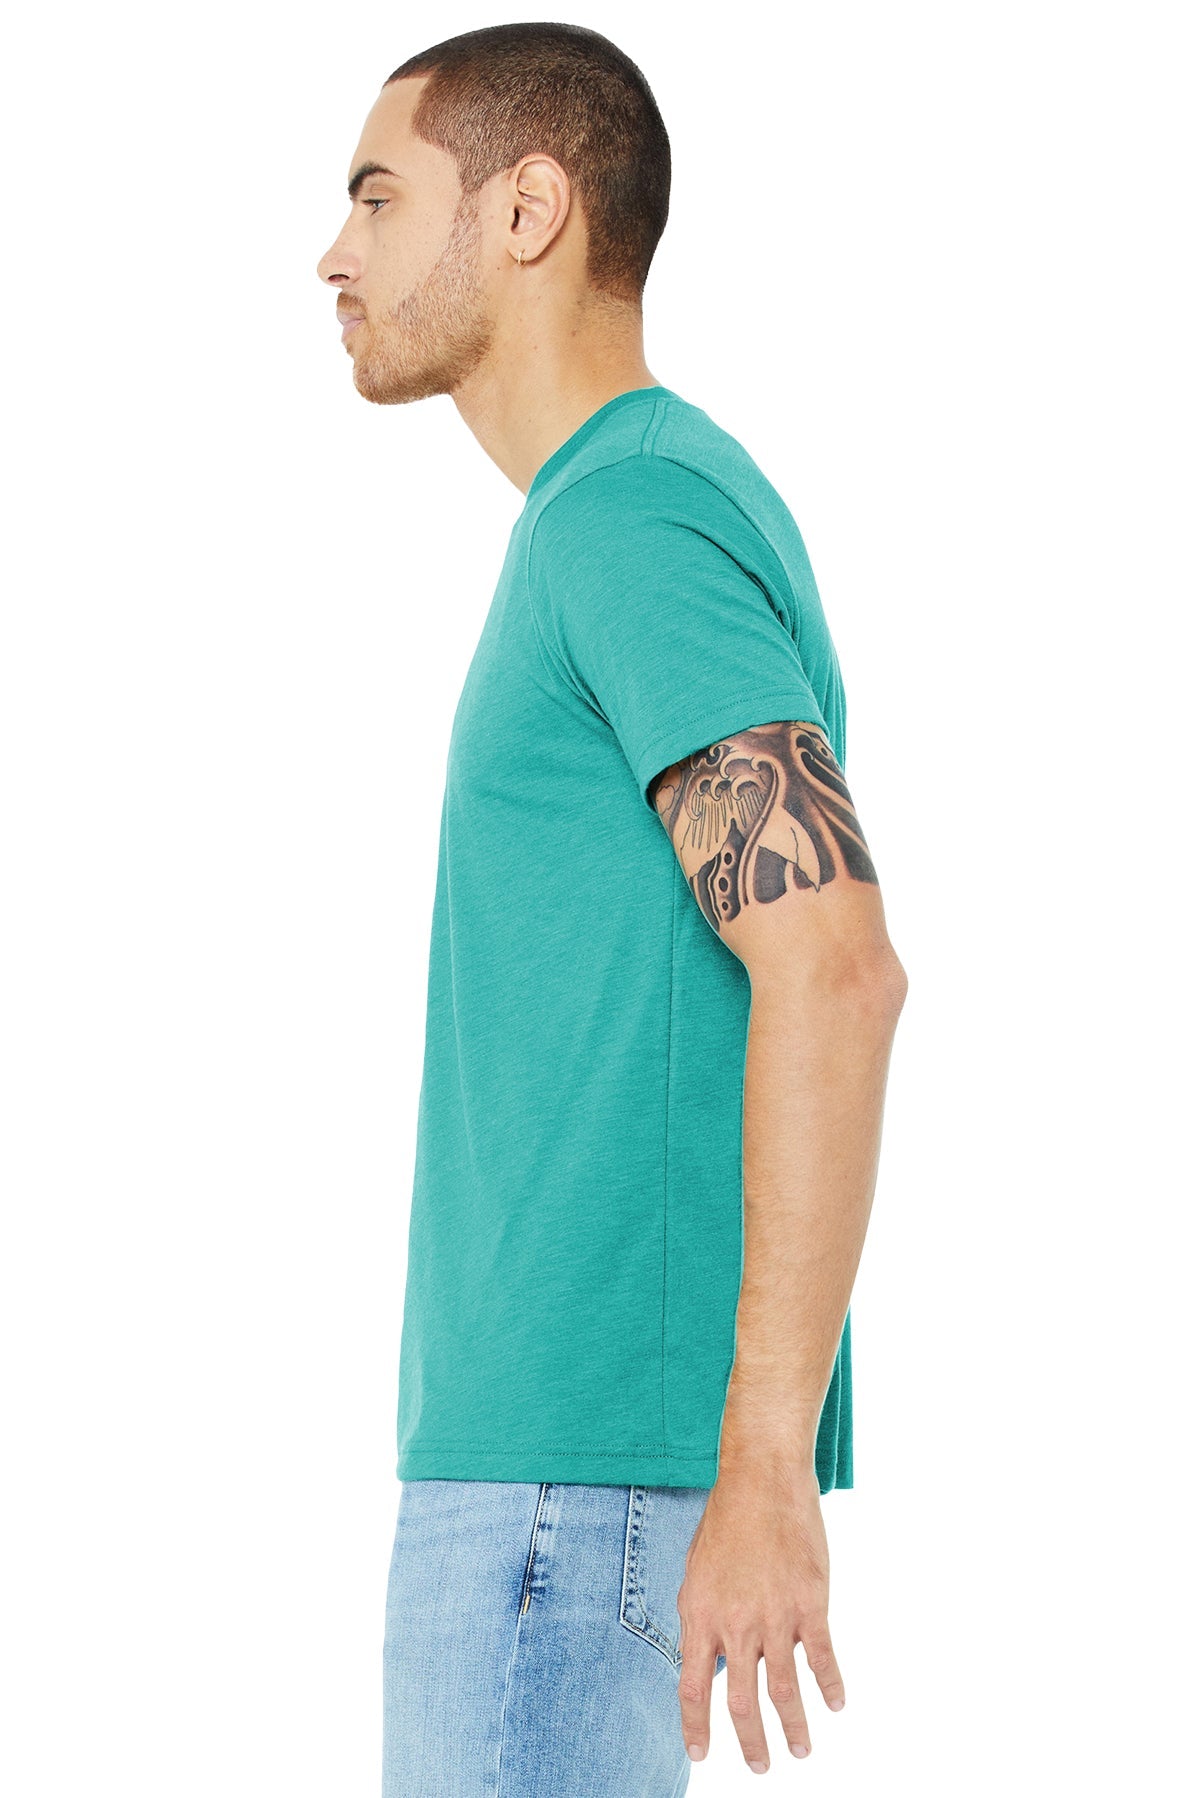 bella + canvas unisex triblend short sleeve t-shirt 3413c sea green trblnd